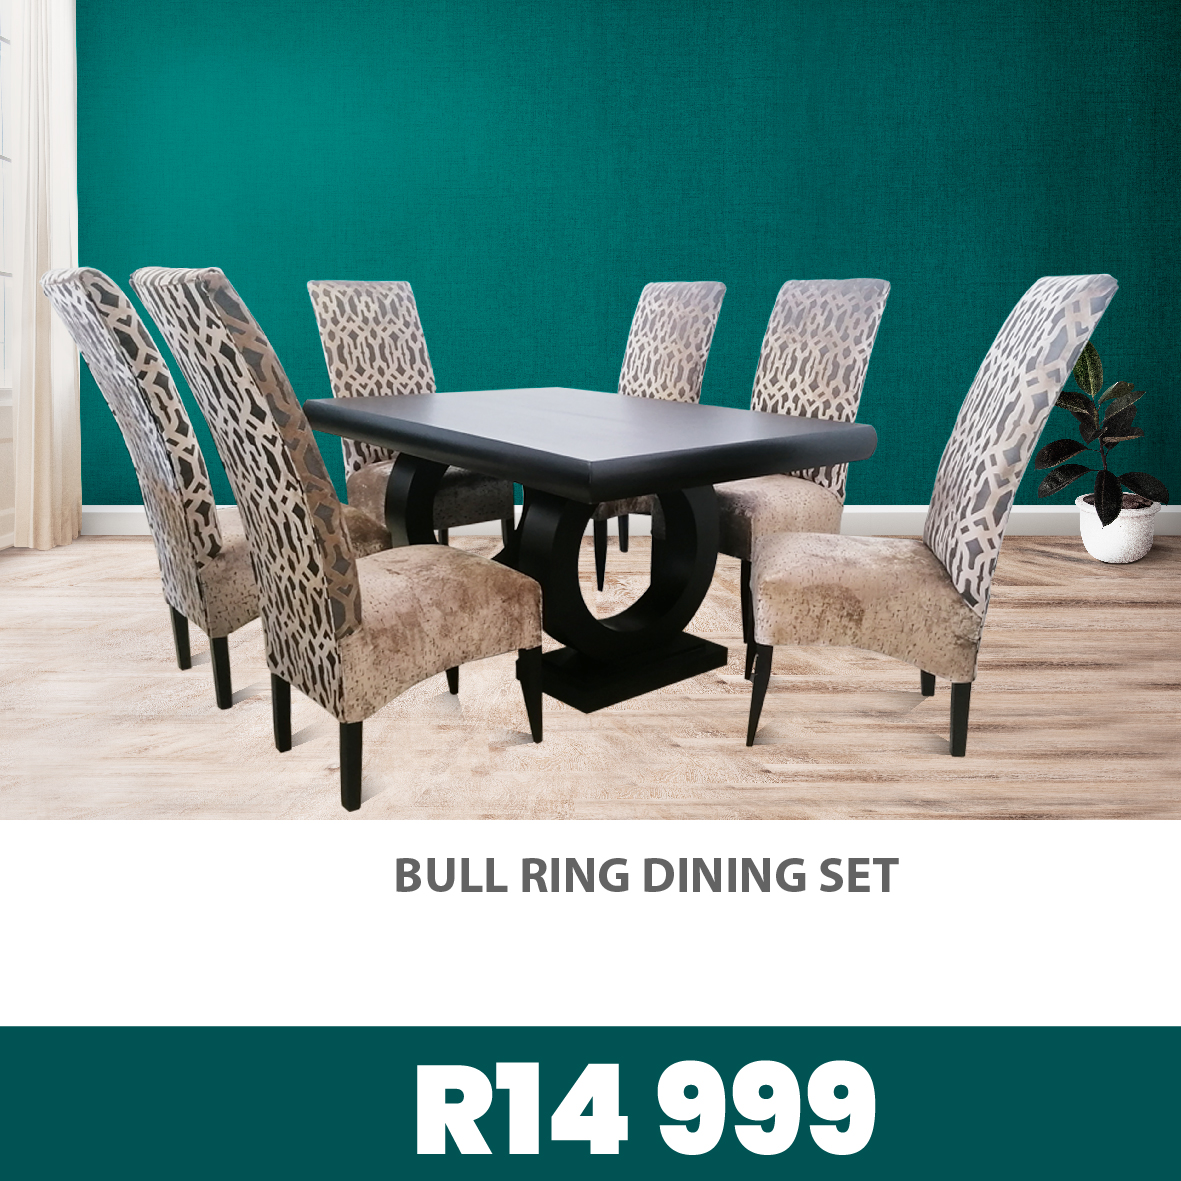 BULL RING DINING-01